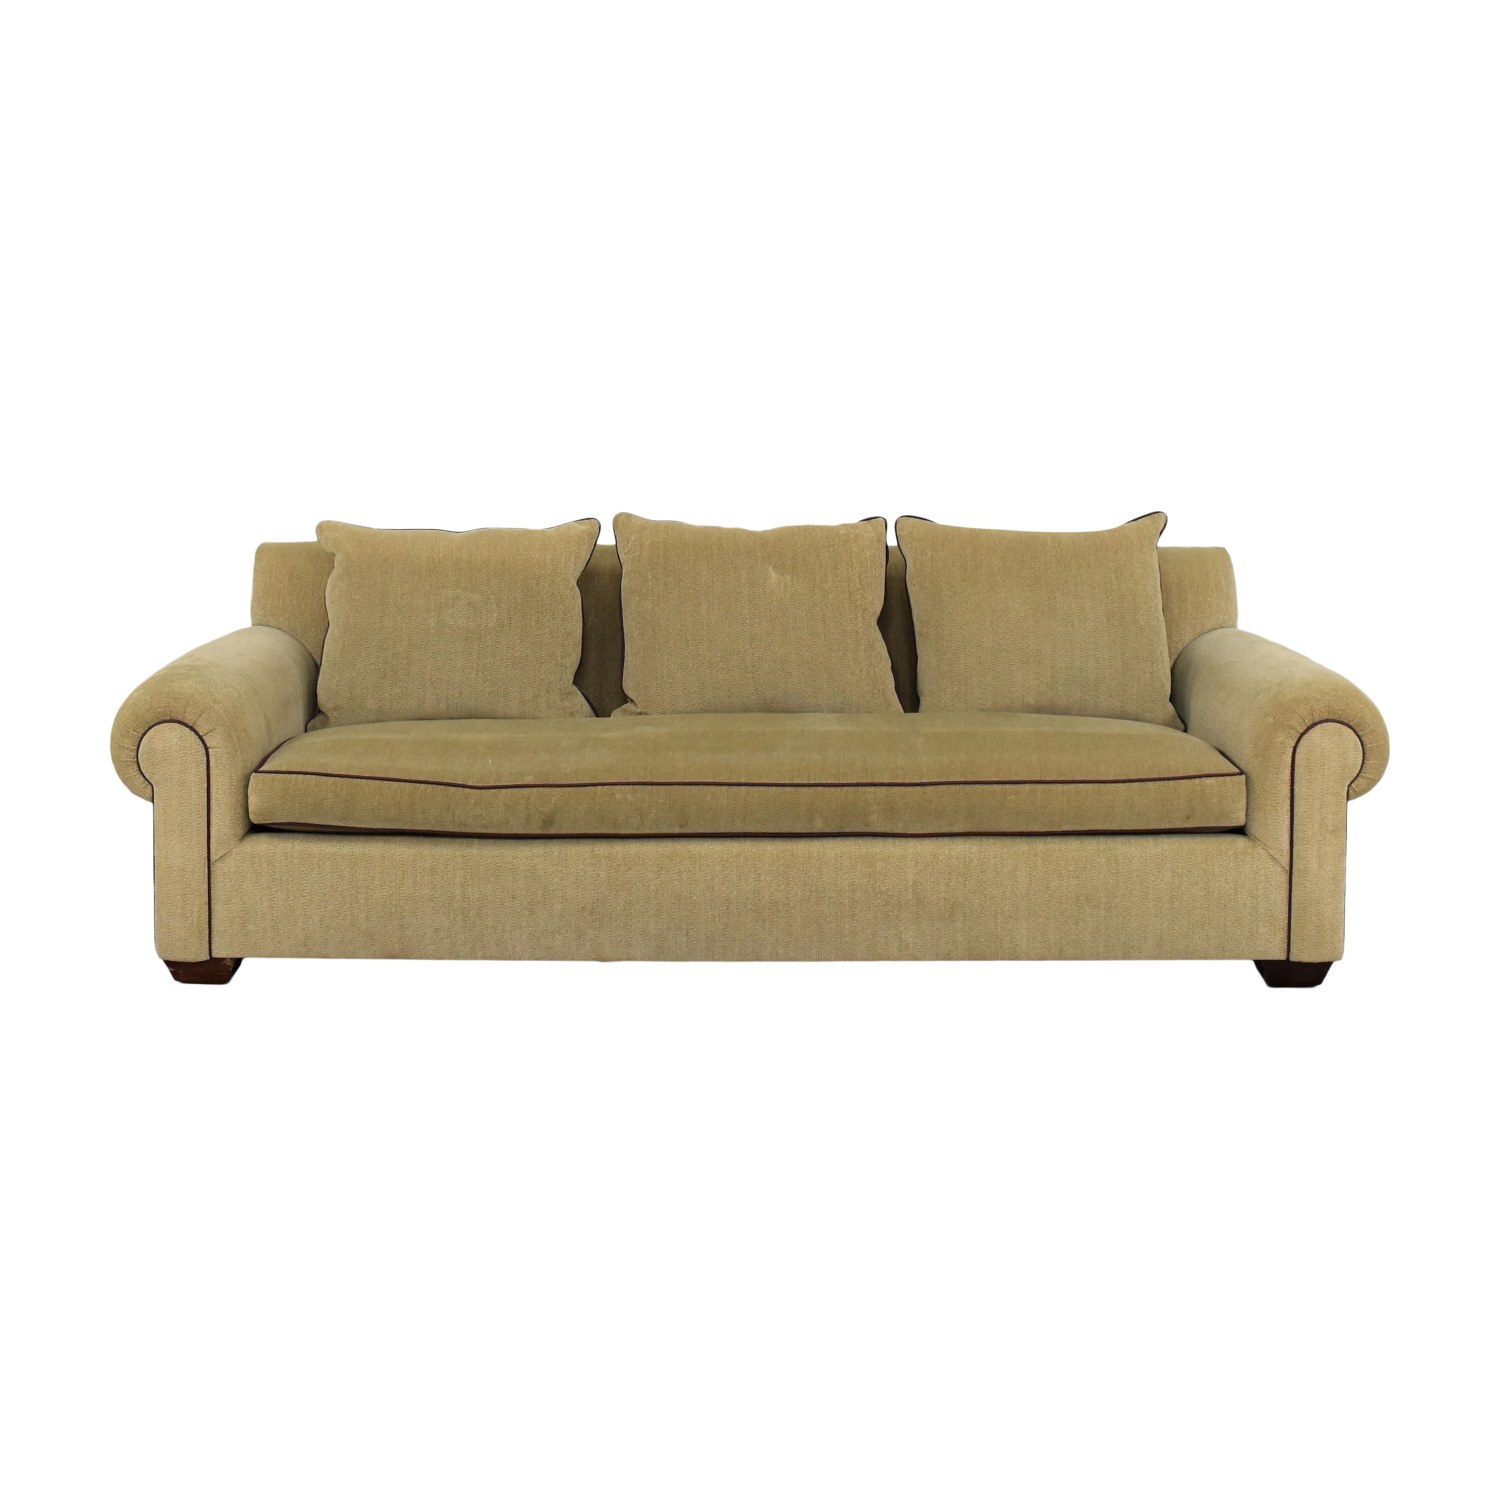 https://res.cloudinary.com/dkqtxtobb/image/upload/f_auto,q_auto:best,w_1500/product-assets/373149/shop/sofas/classic-sofas/custom-bench-cushion-sofa.jpeg